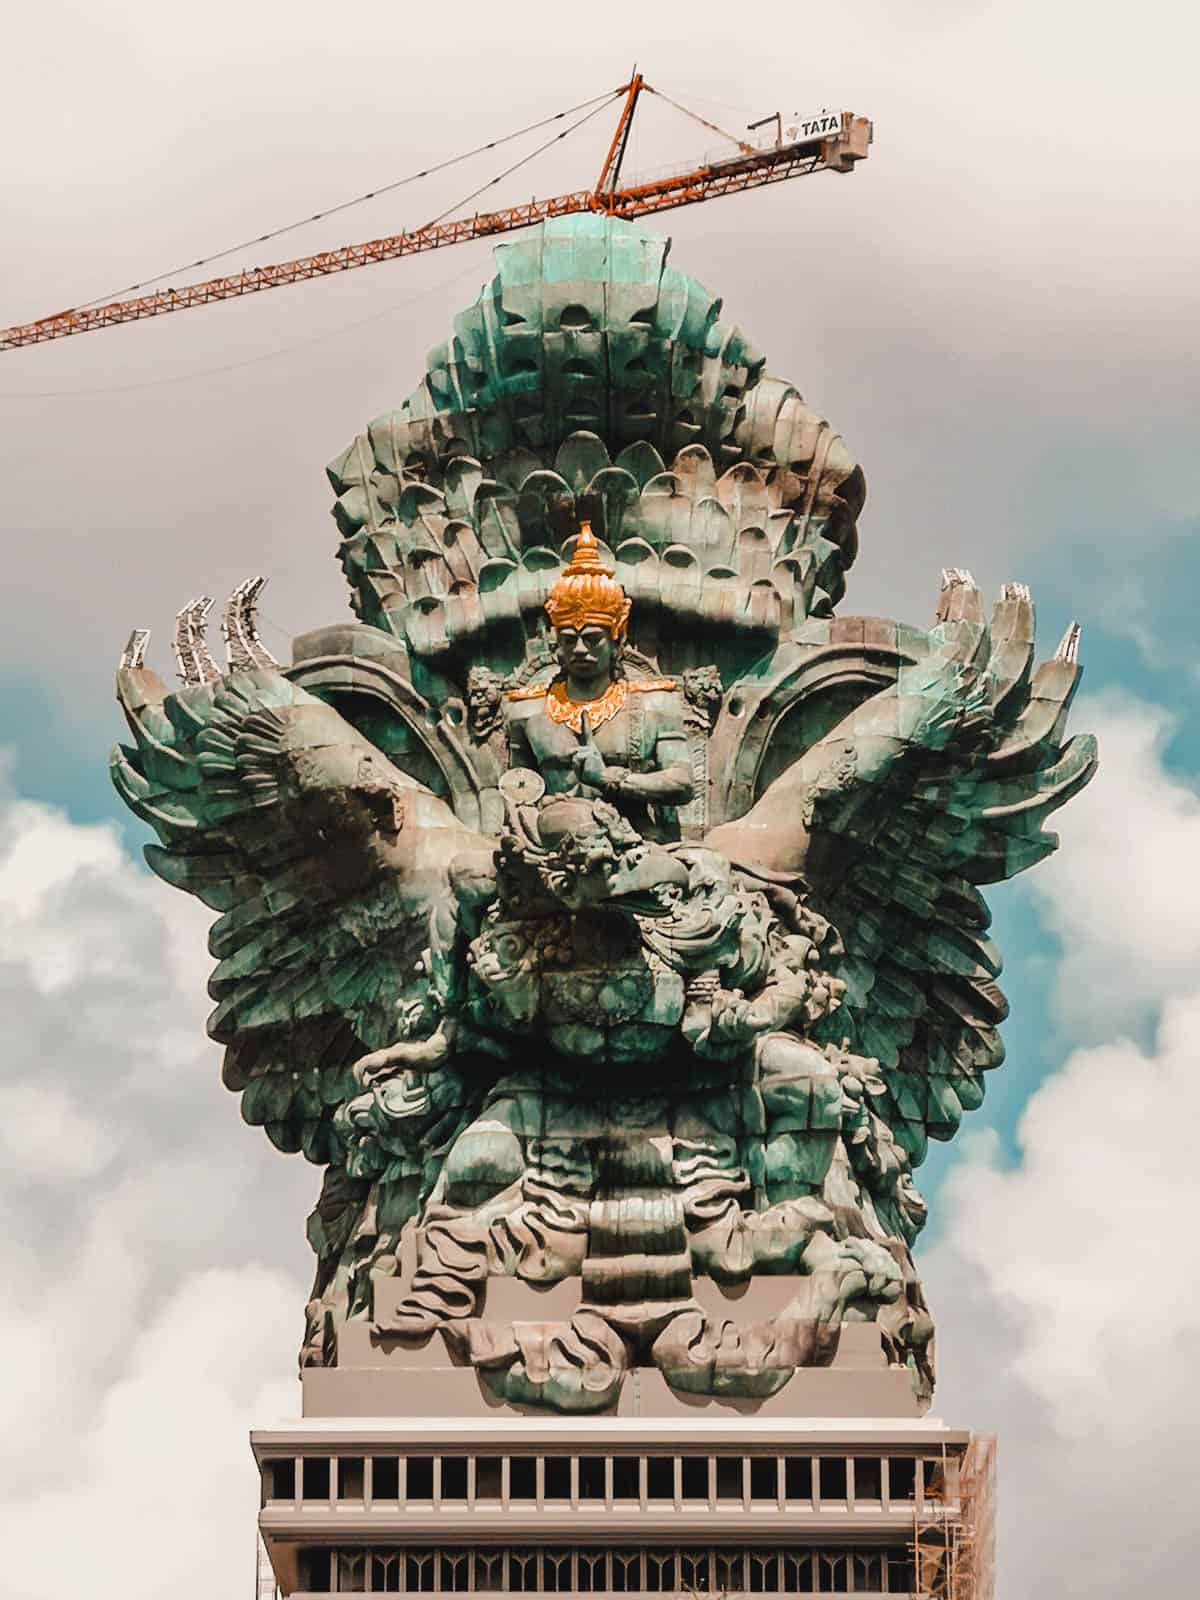 Travel Guide to Bali: Giant statue at Garuda Wisnu Kencana Cultural Park